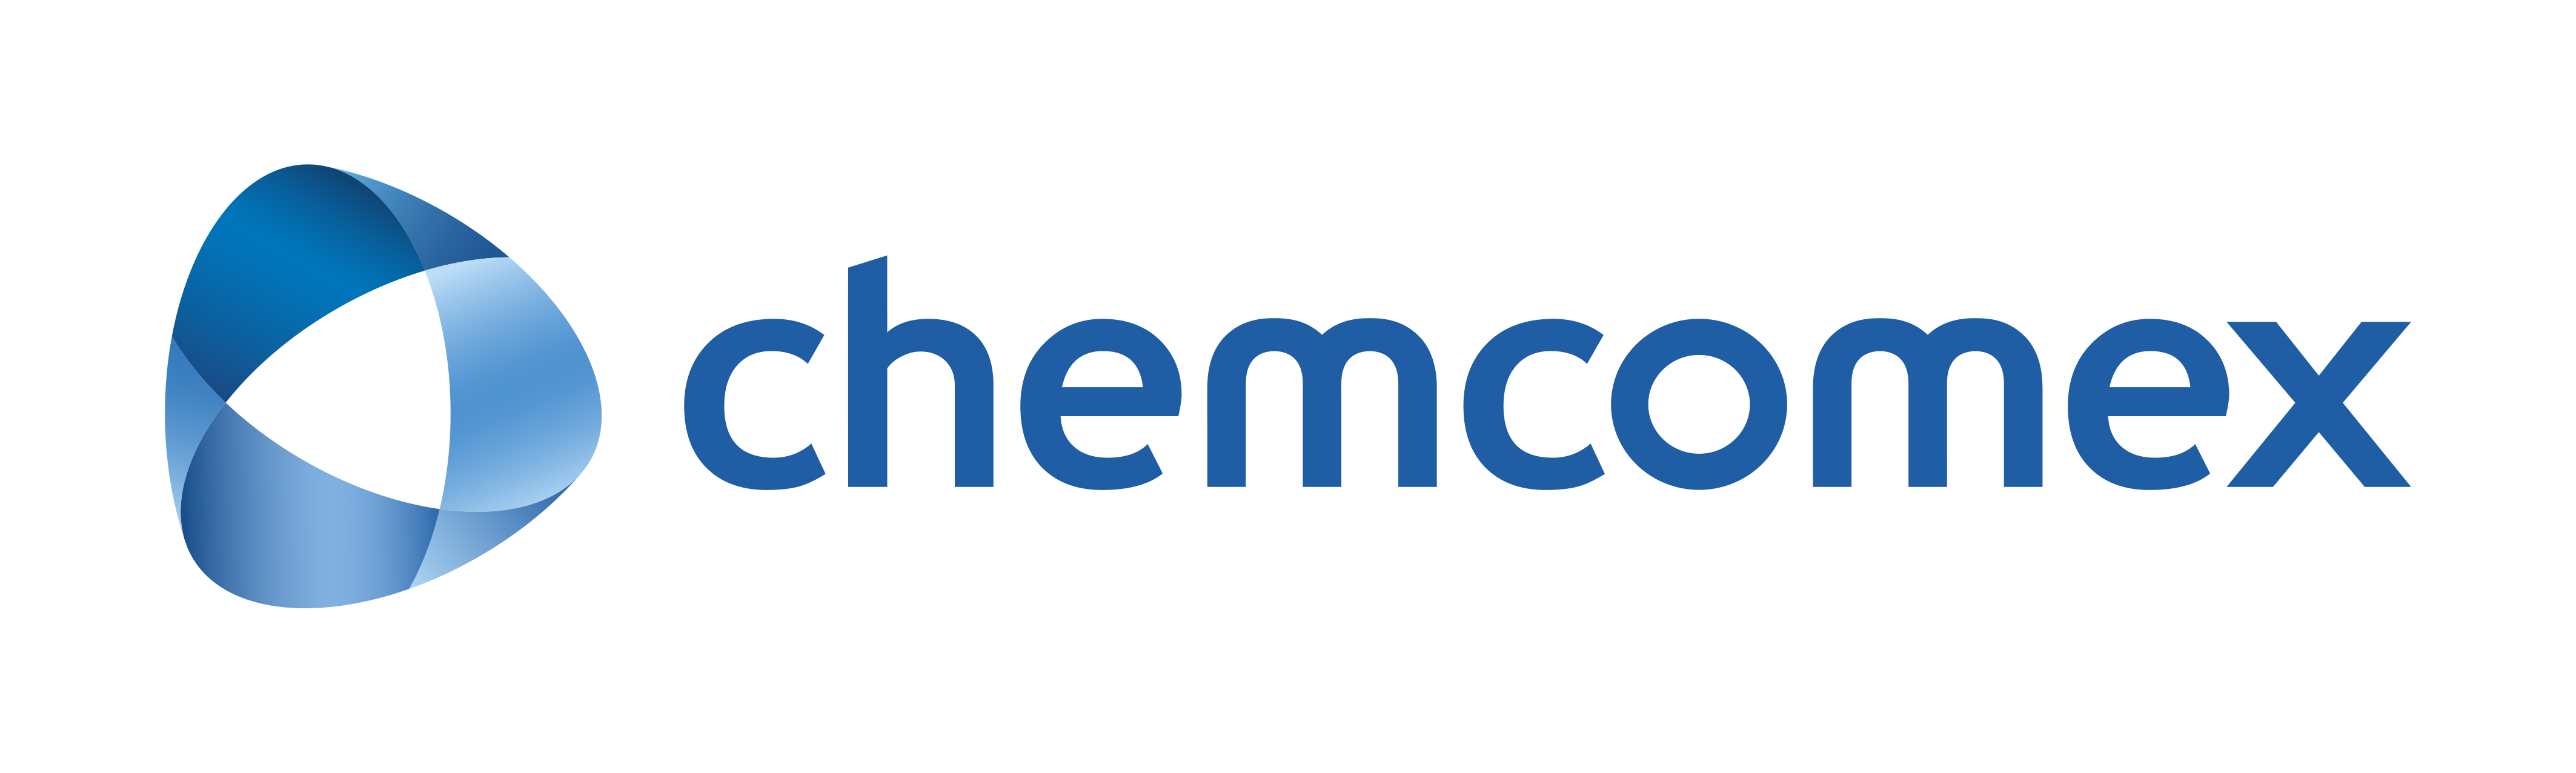 vrtani studni - chemcomec | logo